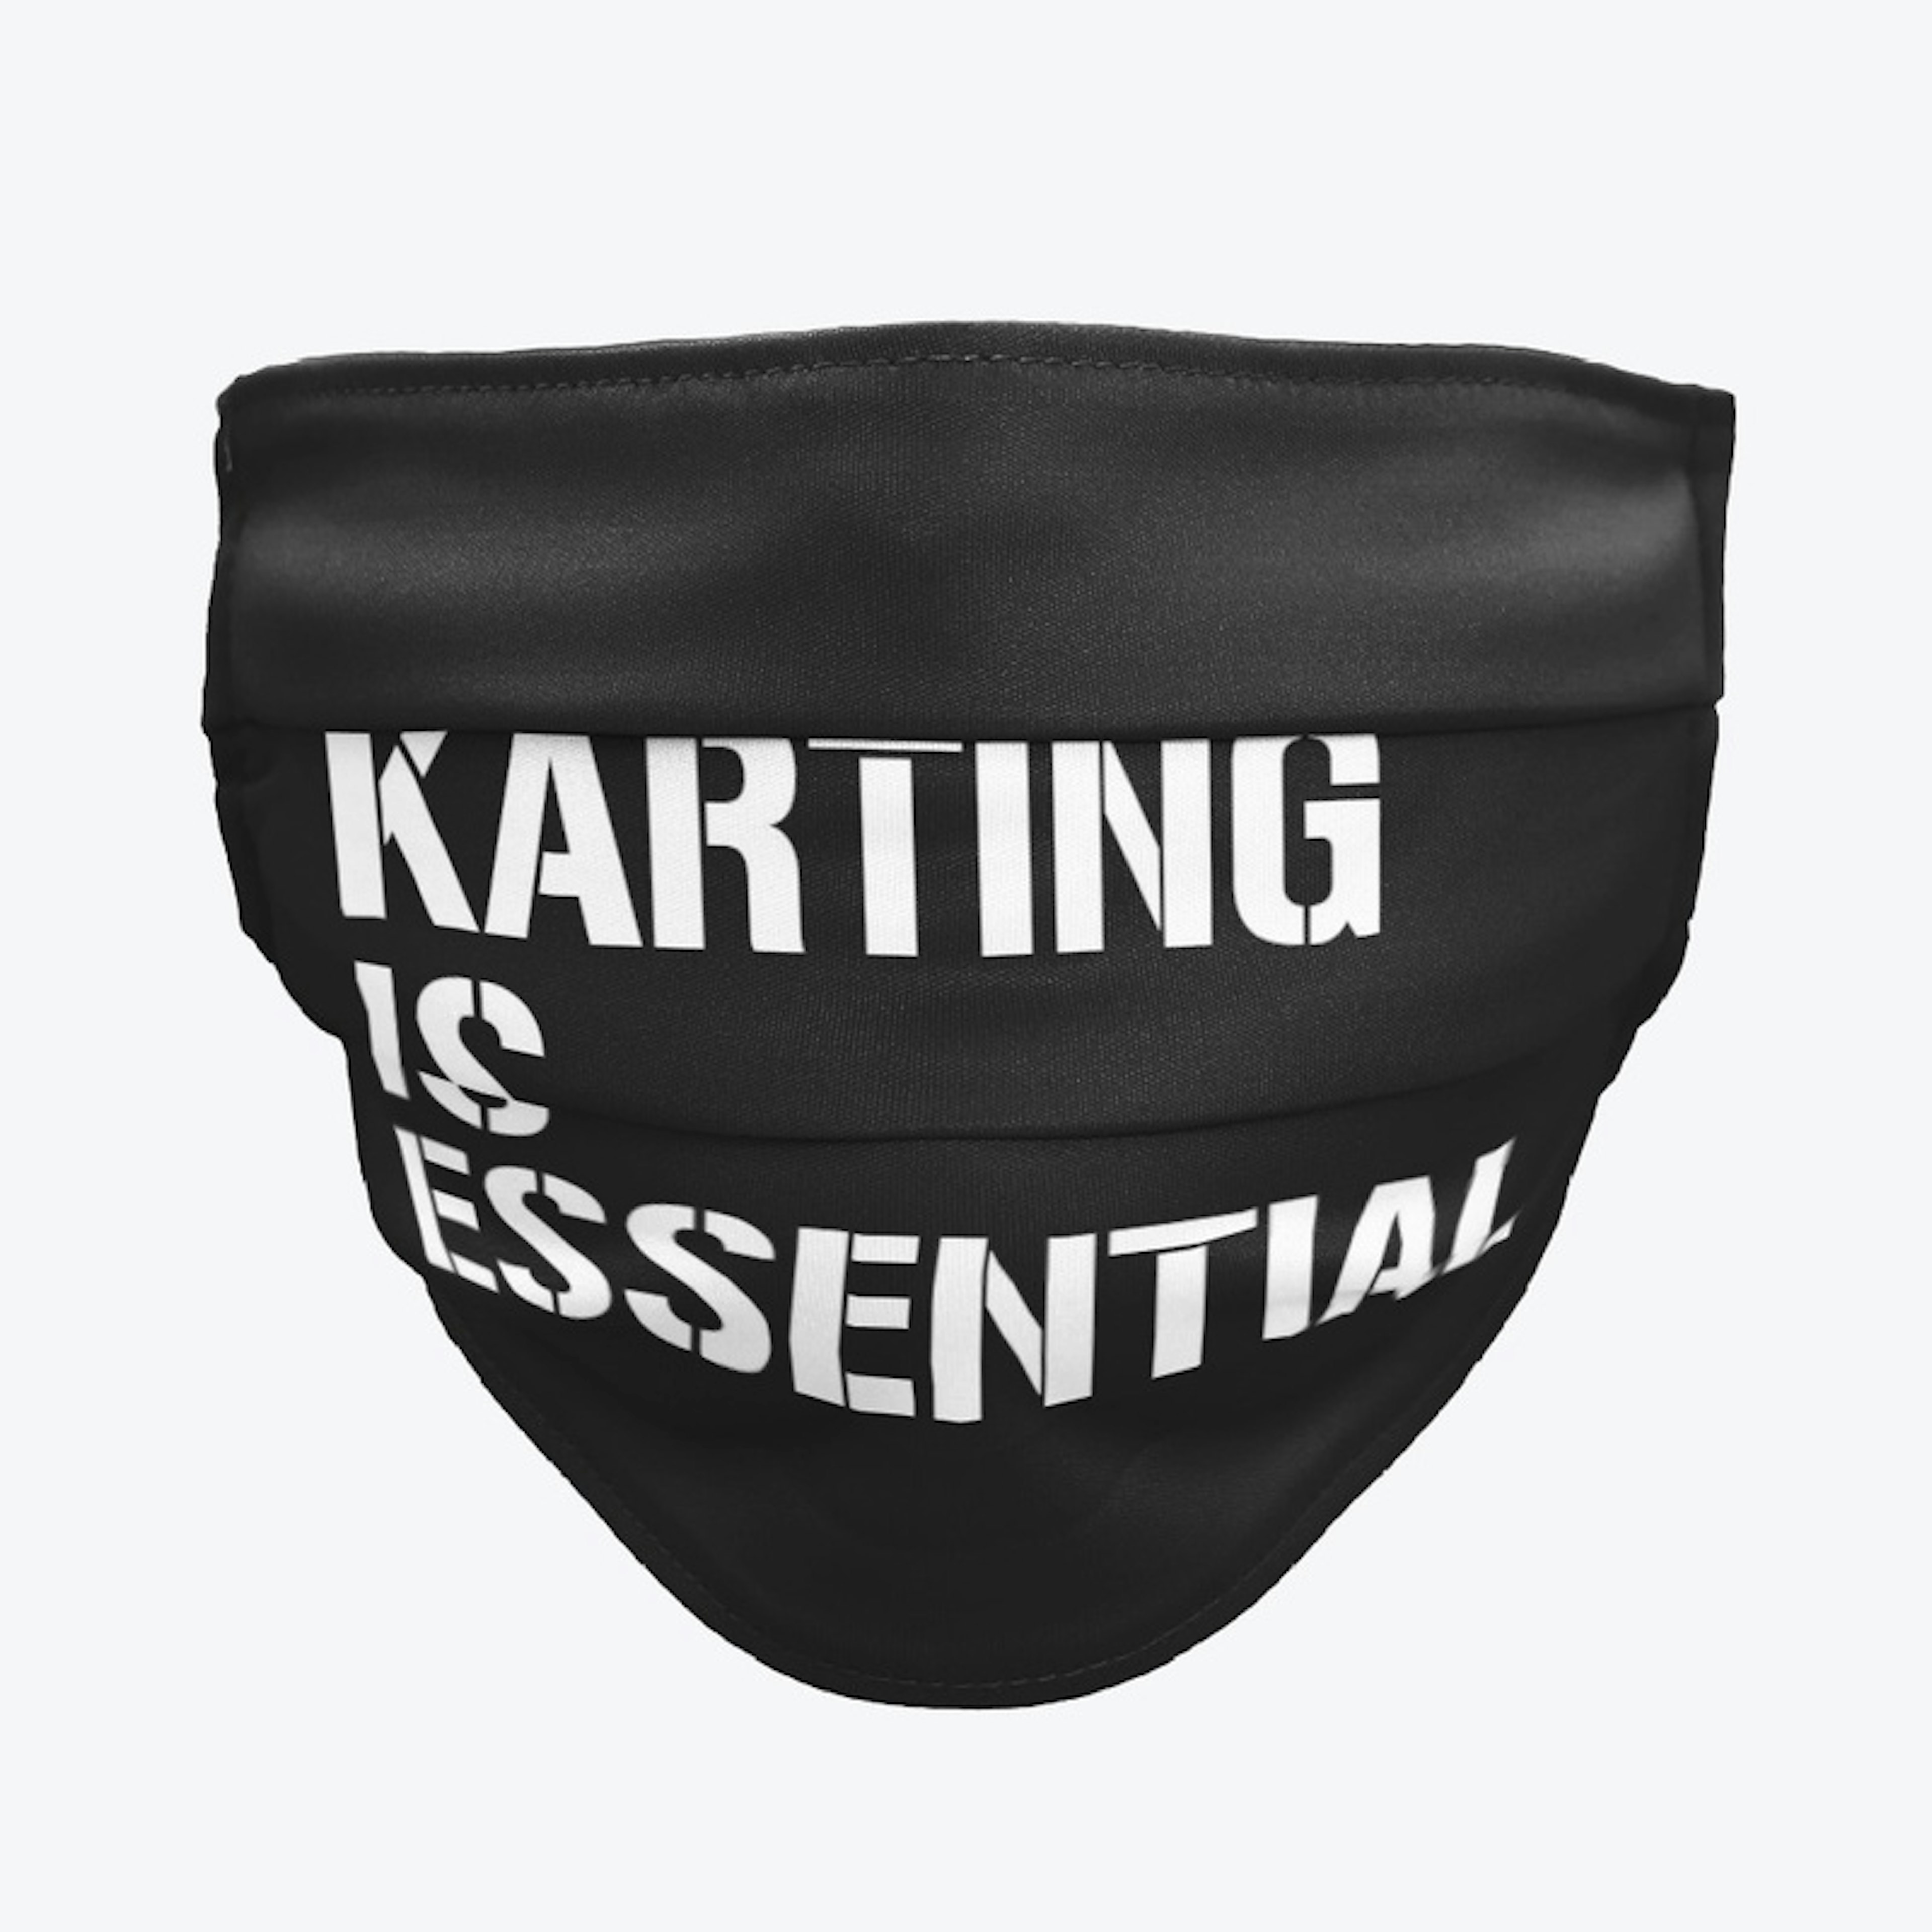 Karting is Essential